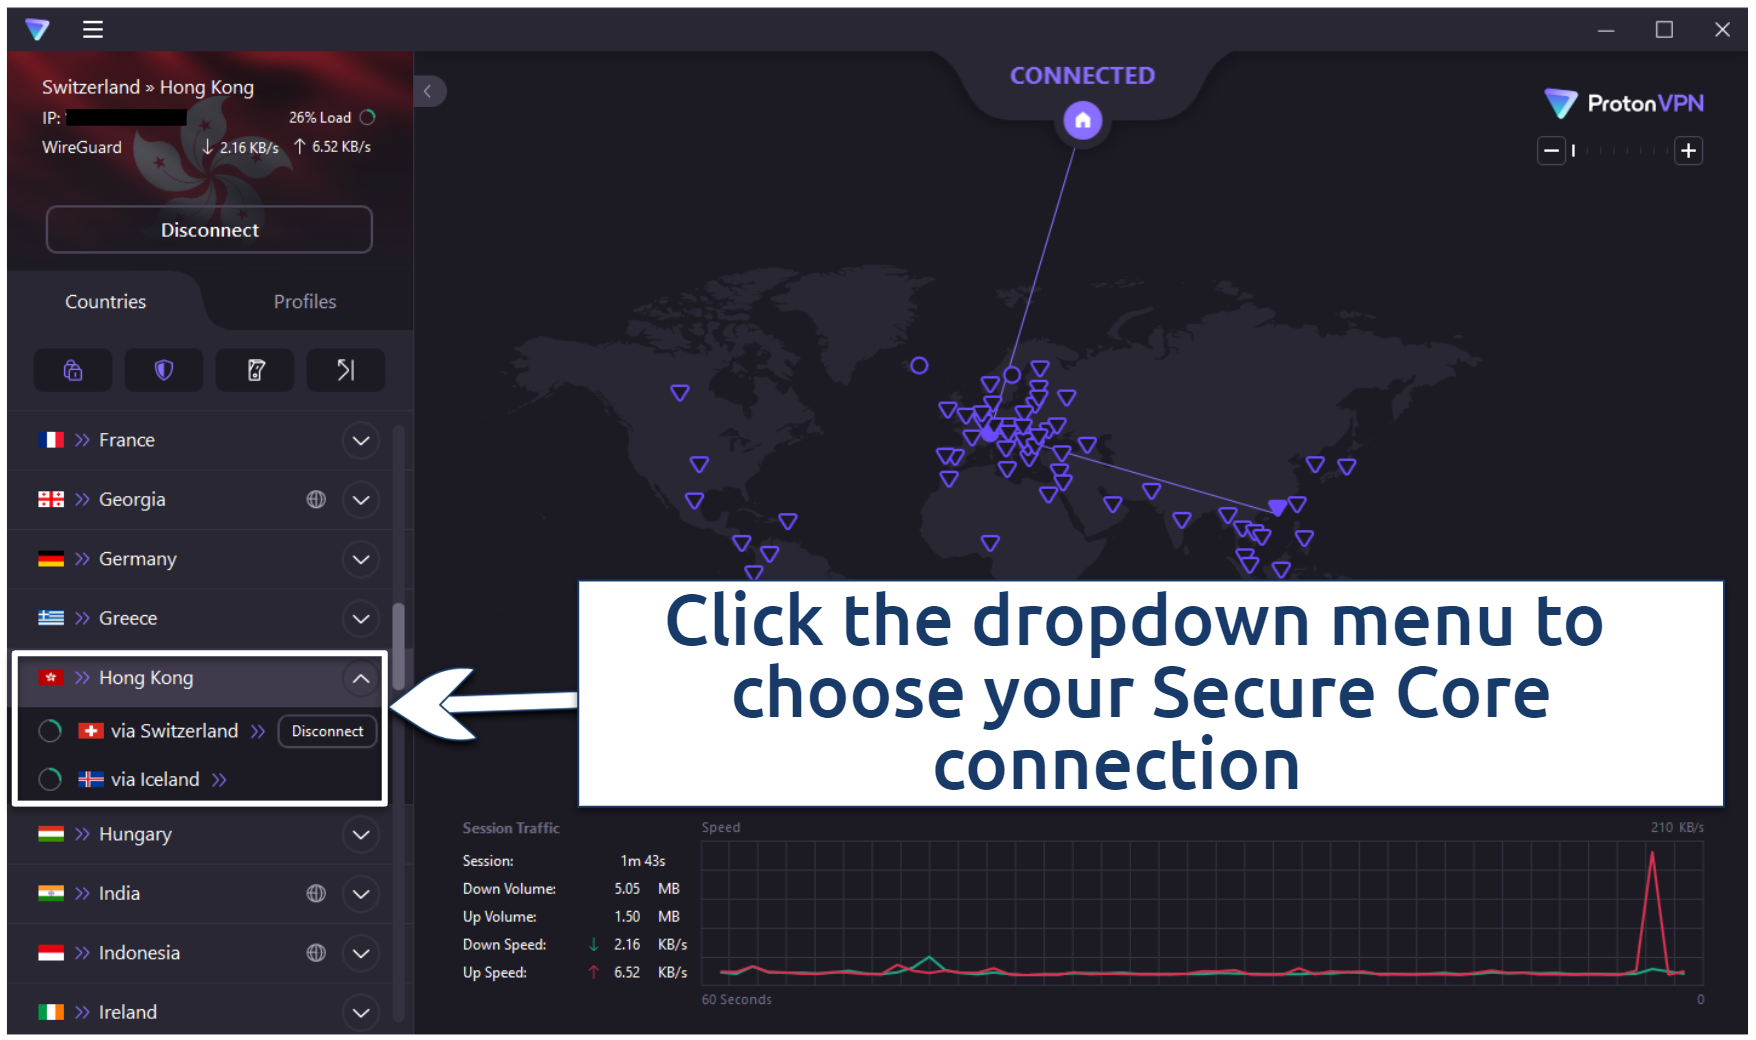 A screenshot of Proton VPN connected to Hong Kong via Switzerland